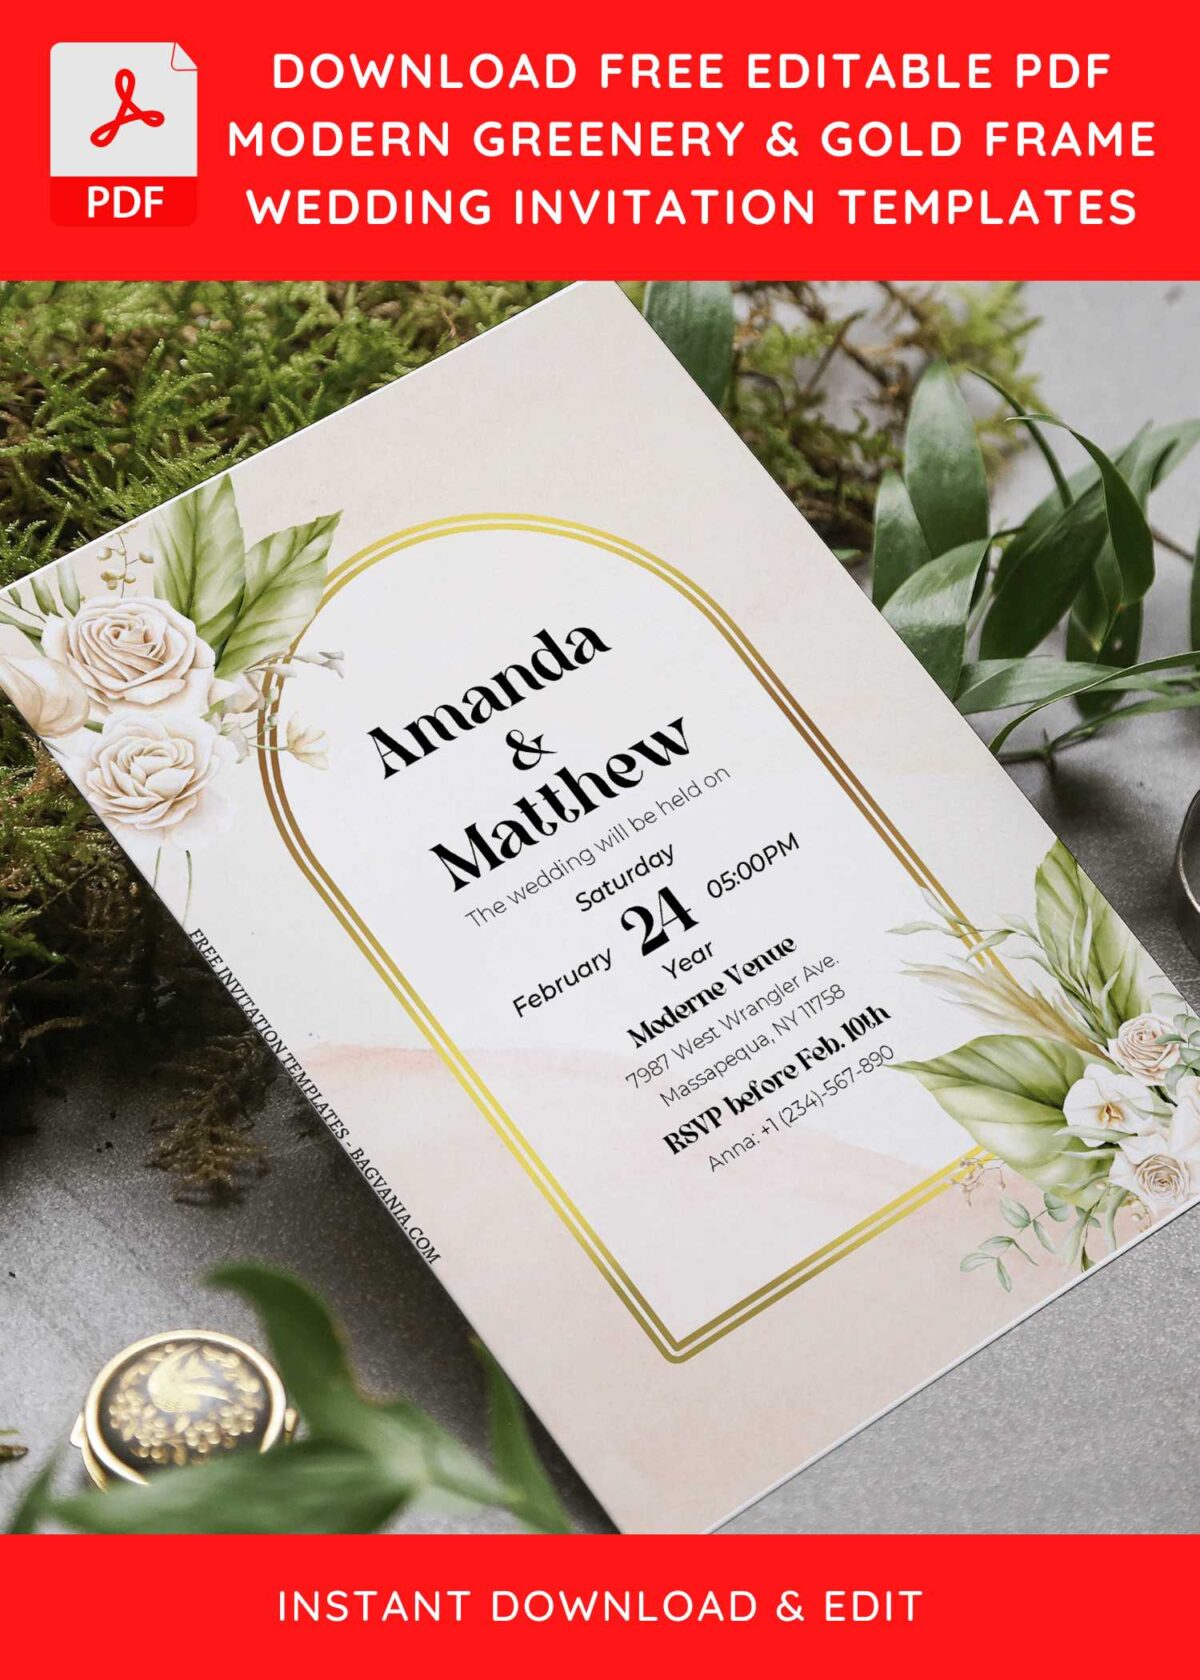 (Free Editable PDF) Ethereal Rustic Boho Greenery Wedding Invitation Templates F